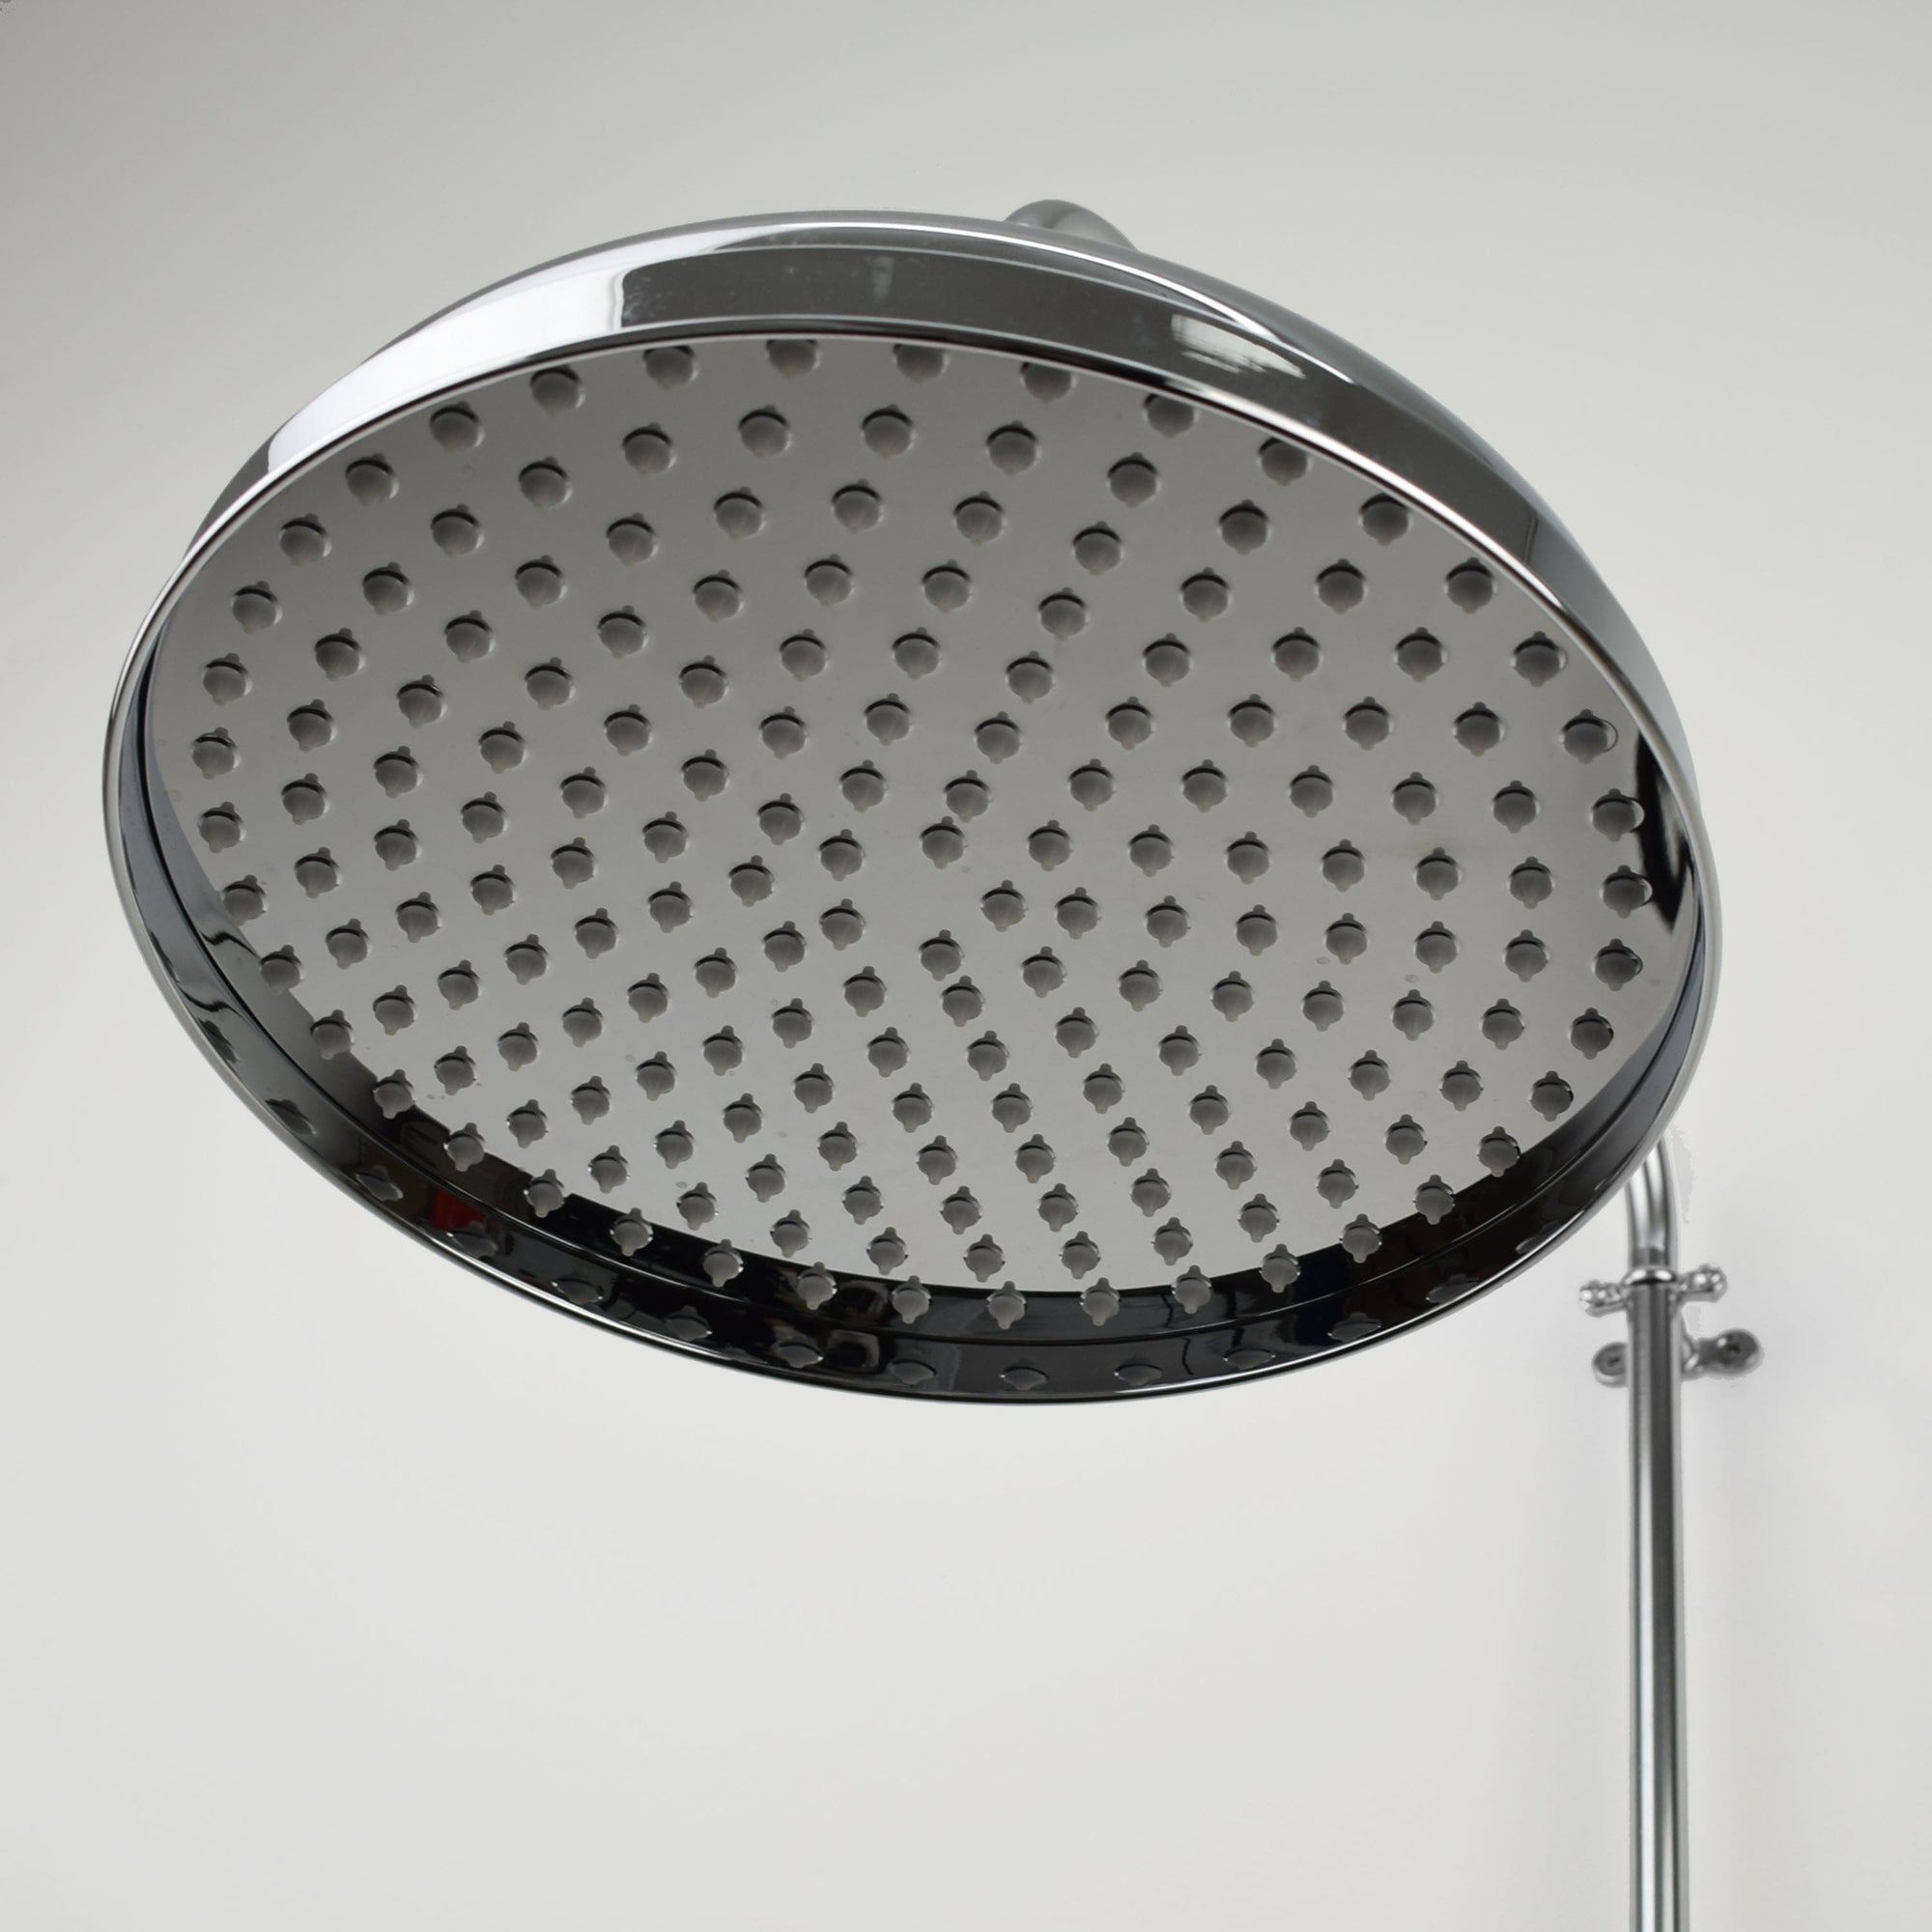 Chrome Shower Head - Large Traditional Bell - Proper Copper Design